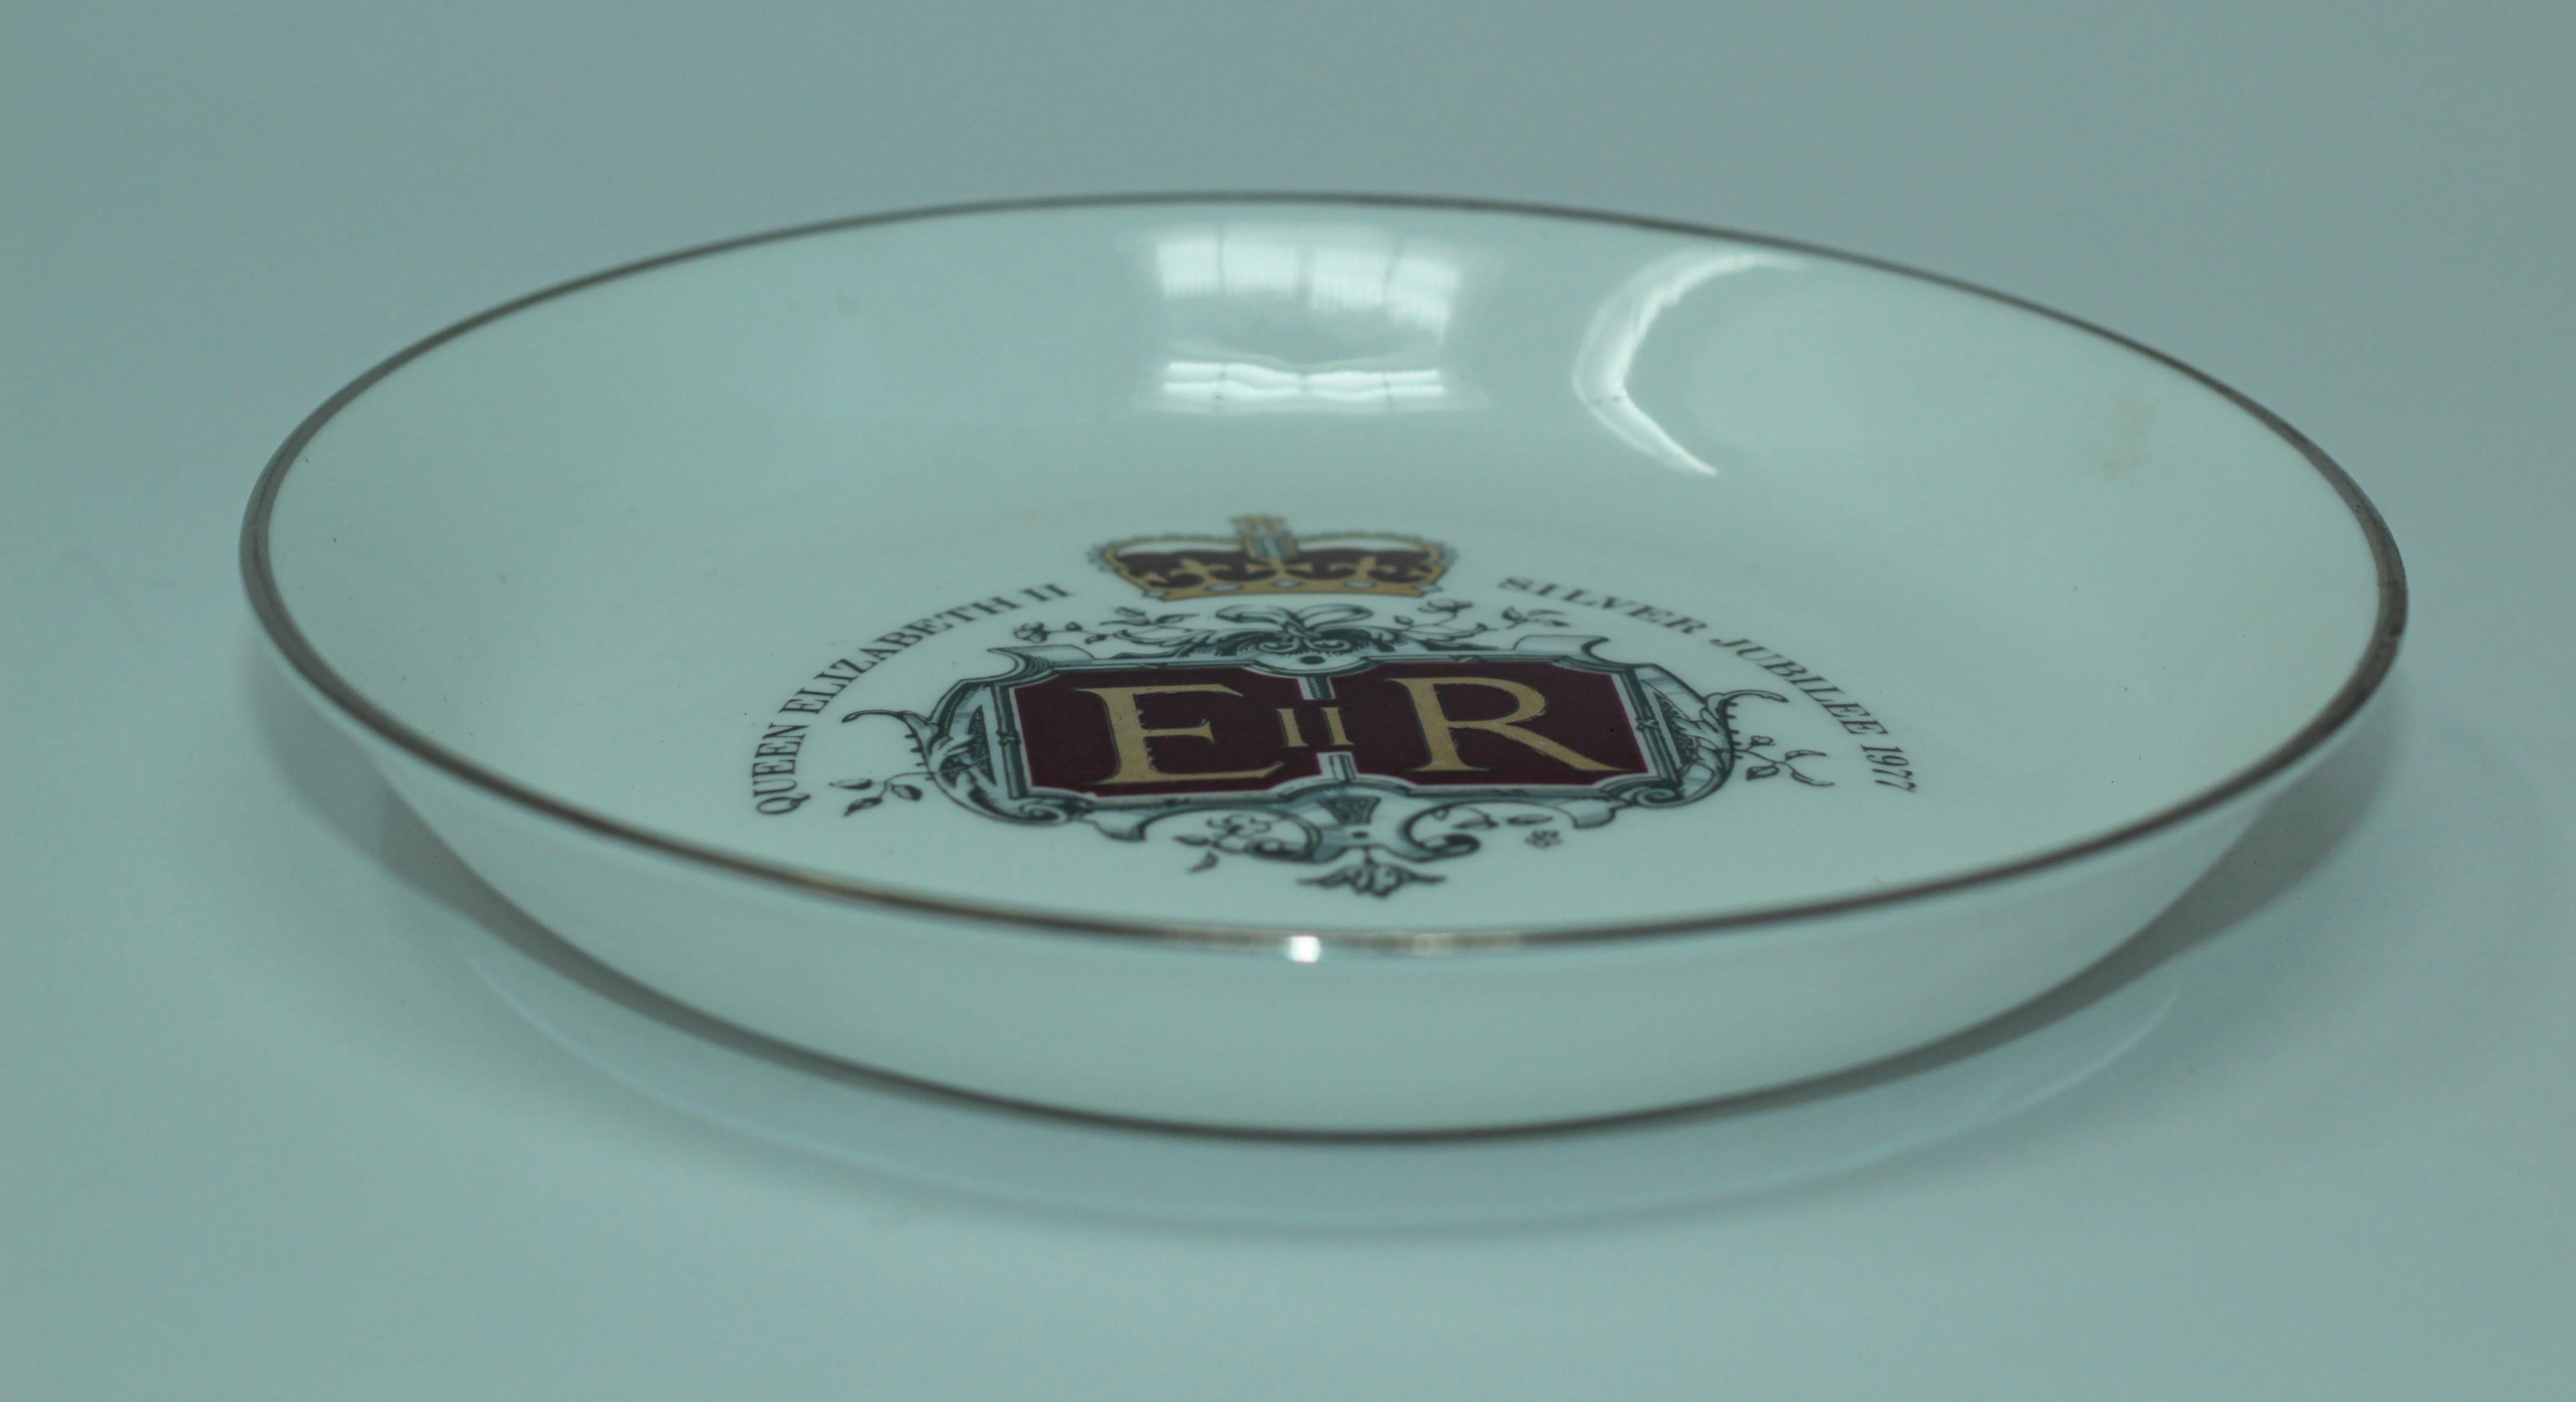 Hand-Crafted Vintage Queen Elizabeth II Silver Jubilee Porcelain Plate, 1977